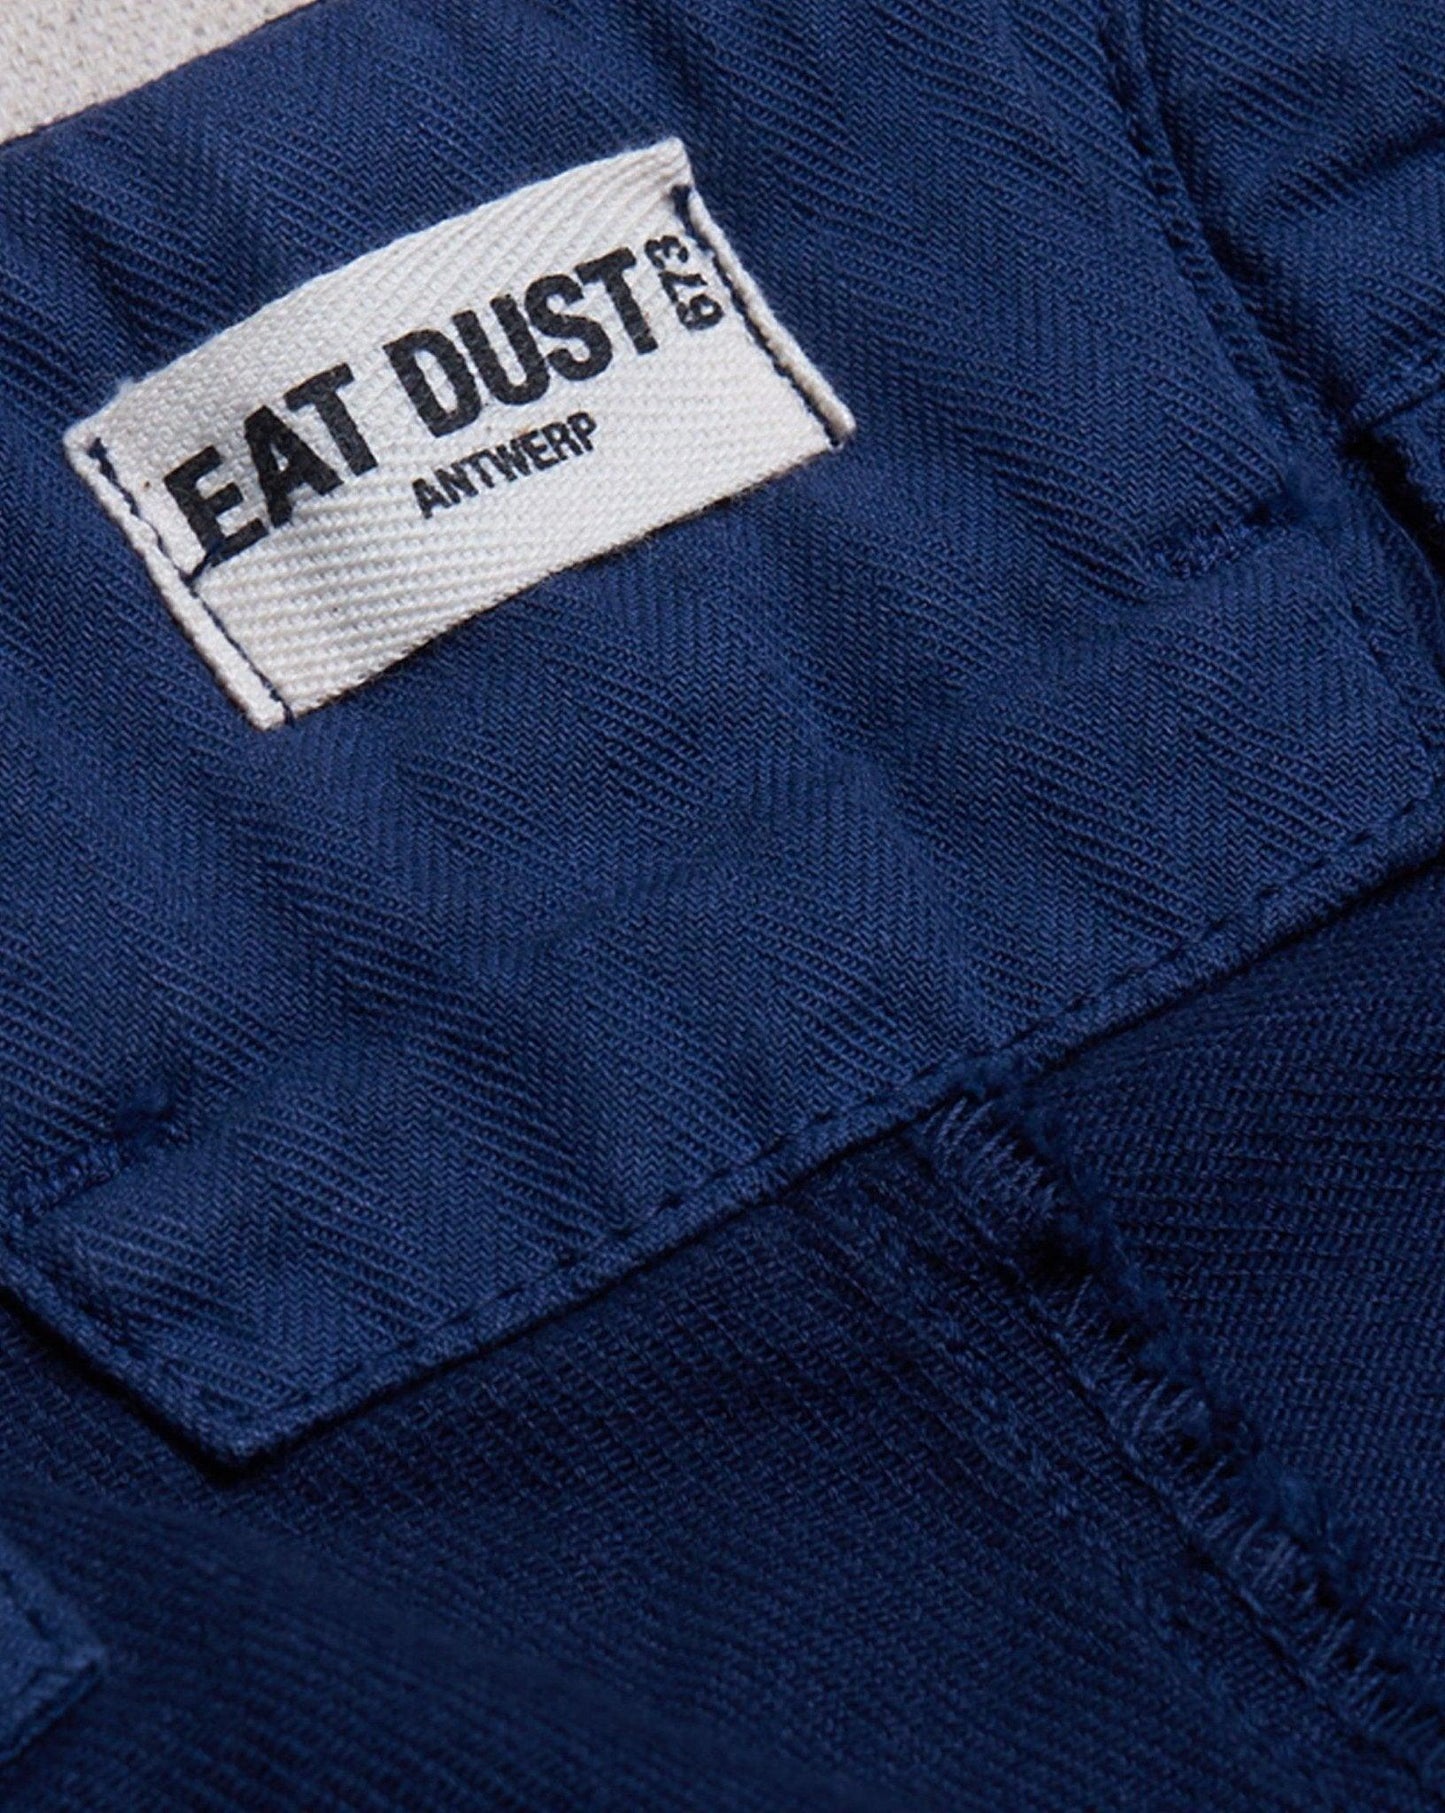 Eat Dust Cotton Twill Combat Pant - Industrial Blue -Eat Dust - URAHARA